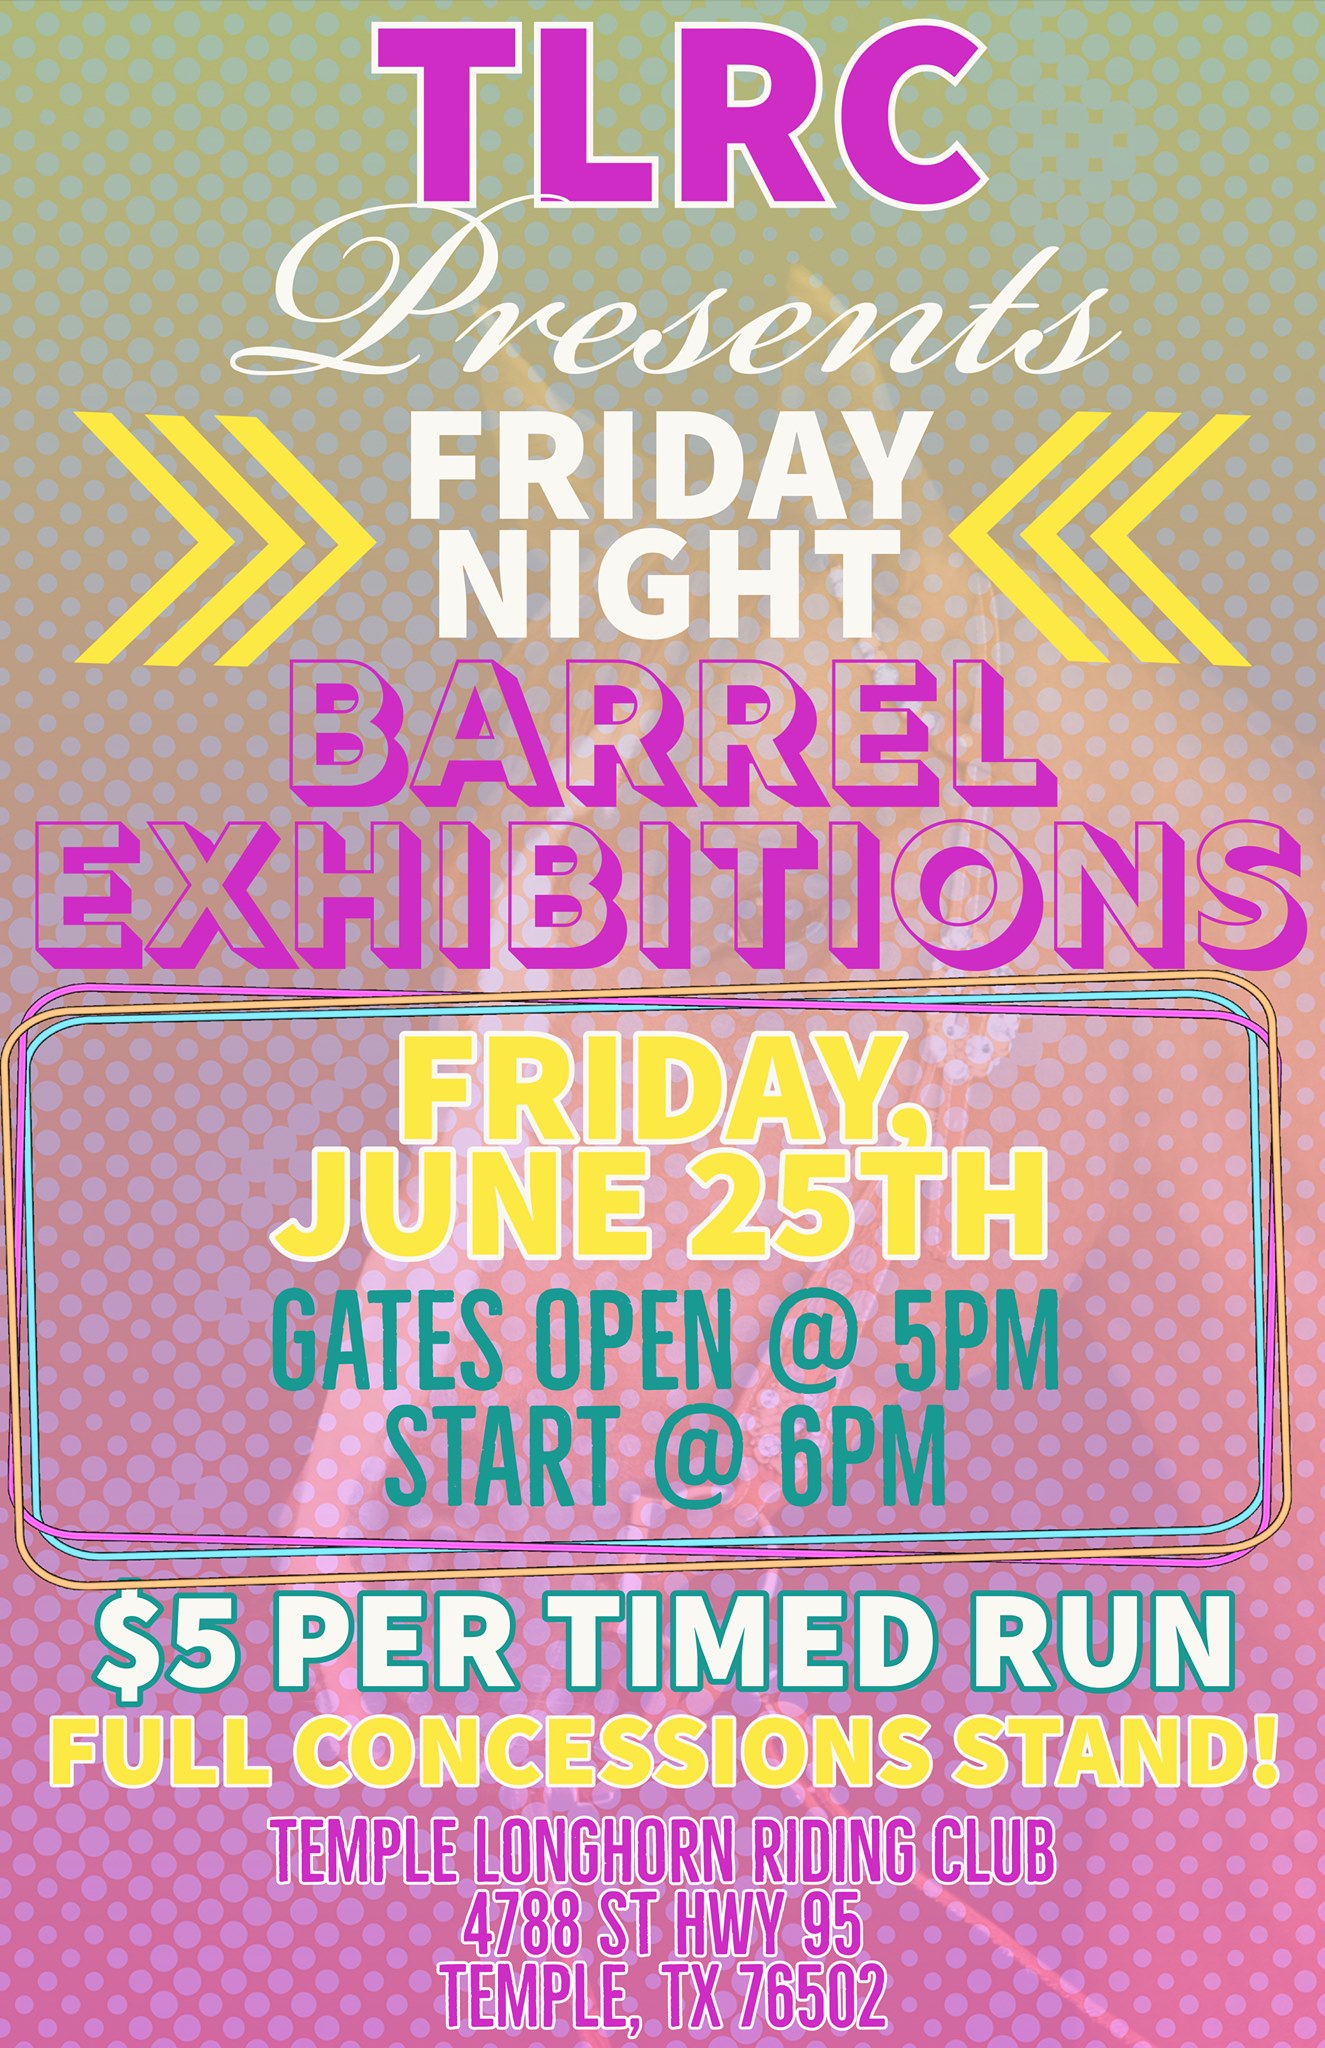 TLRC Friday Night Barrel Exhibitions 